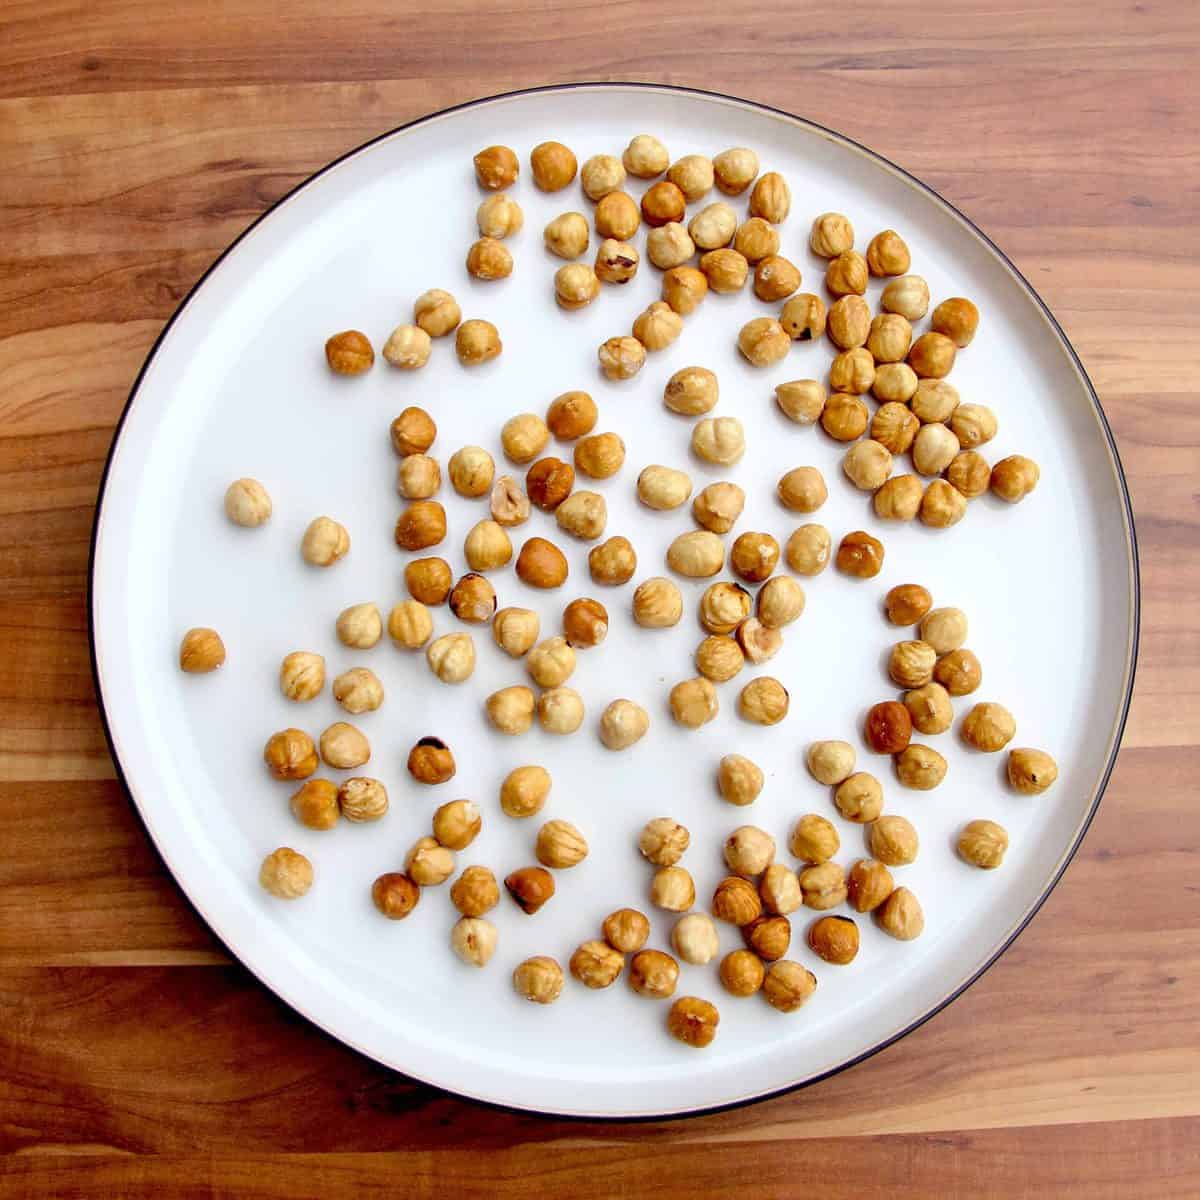 A plate of toasted hazelnuts